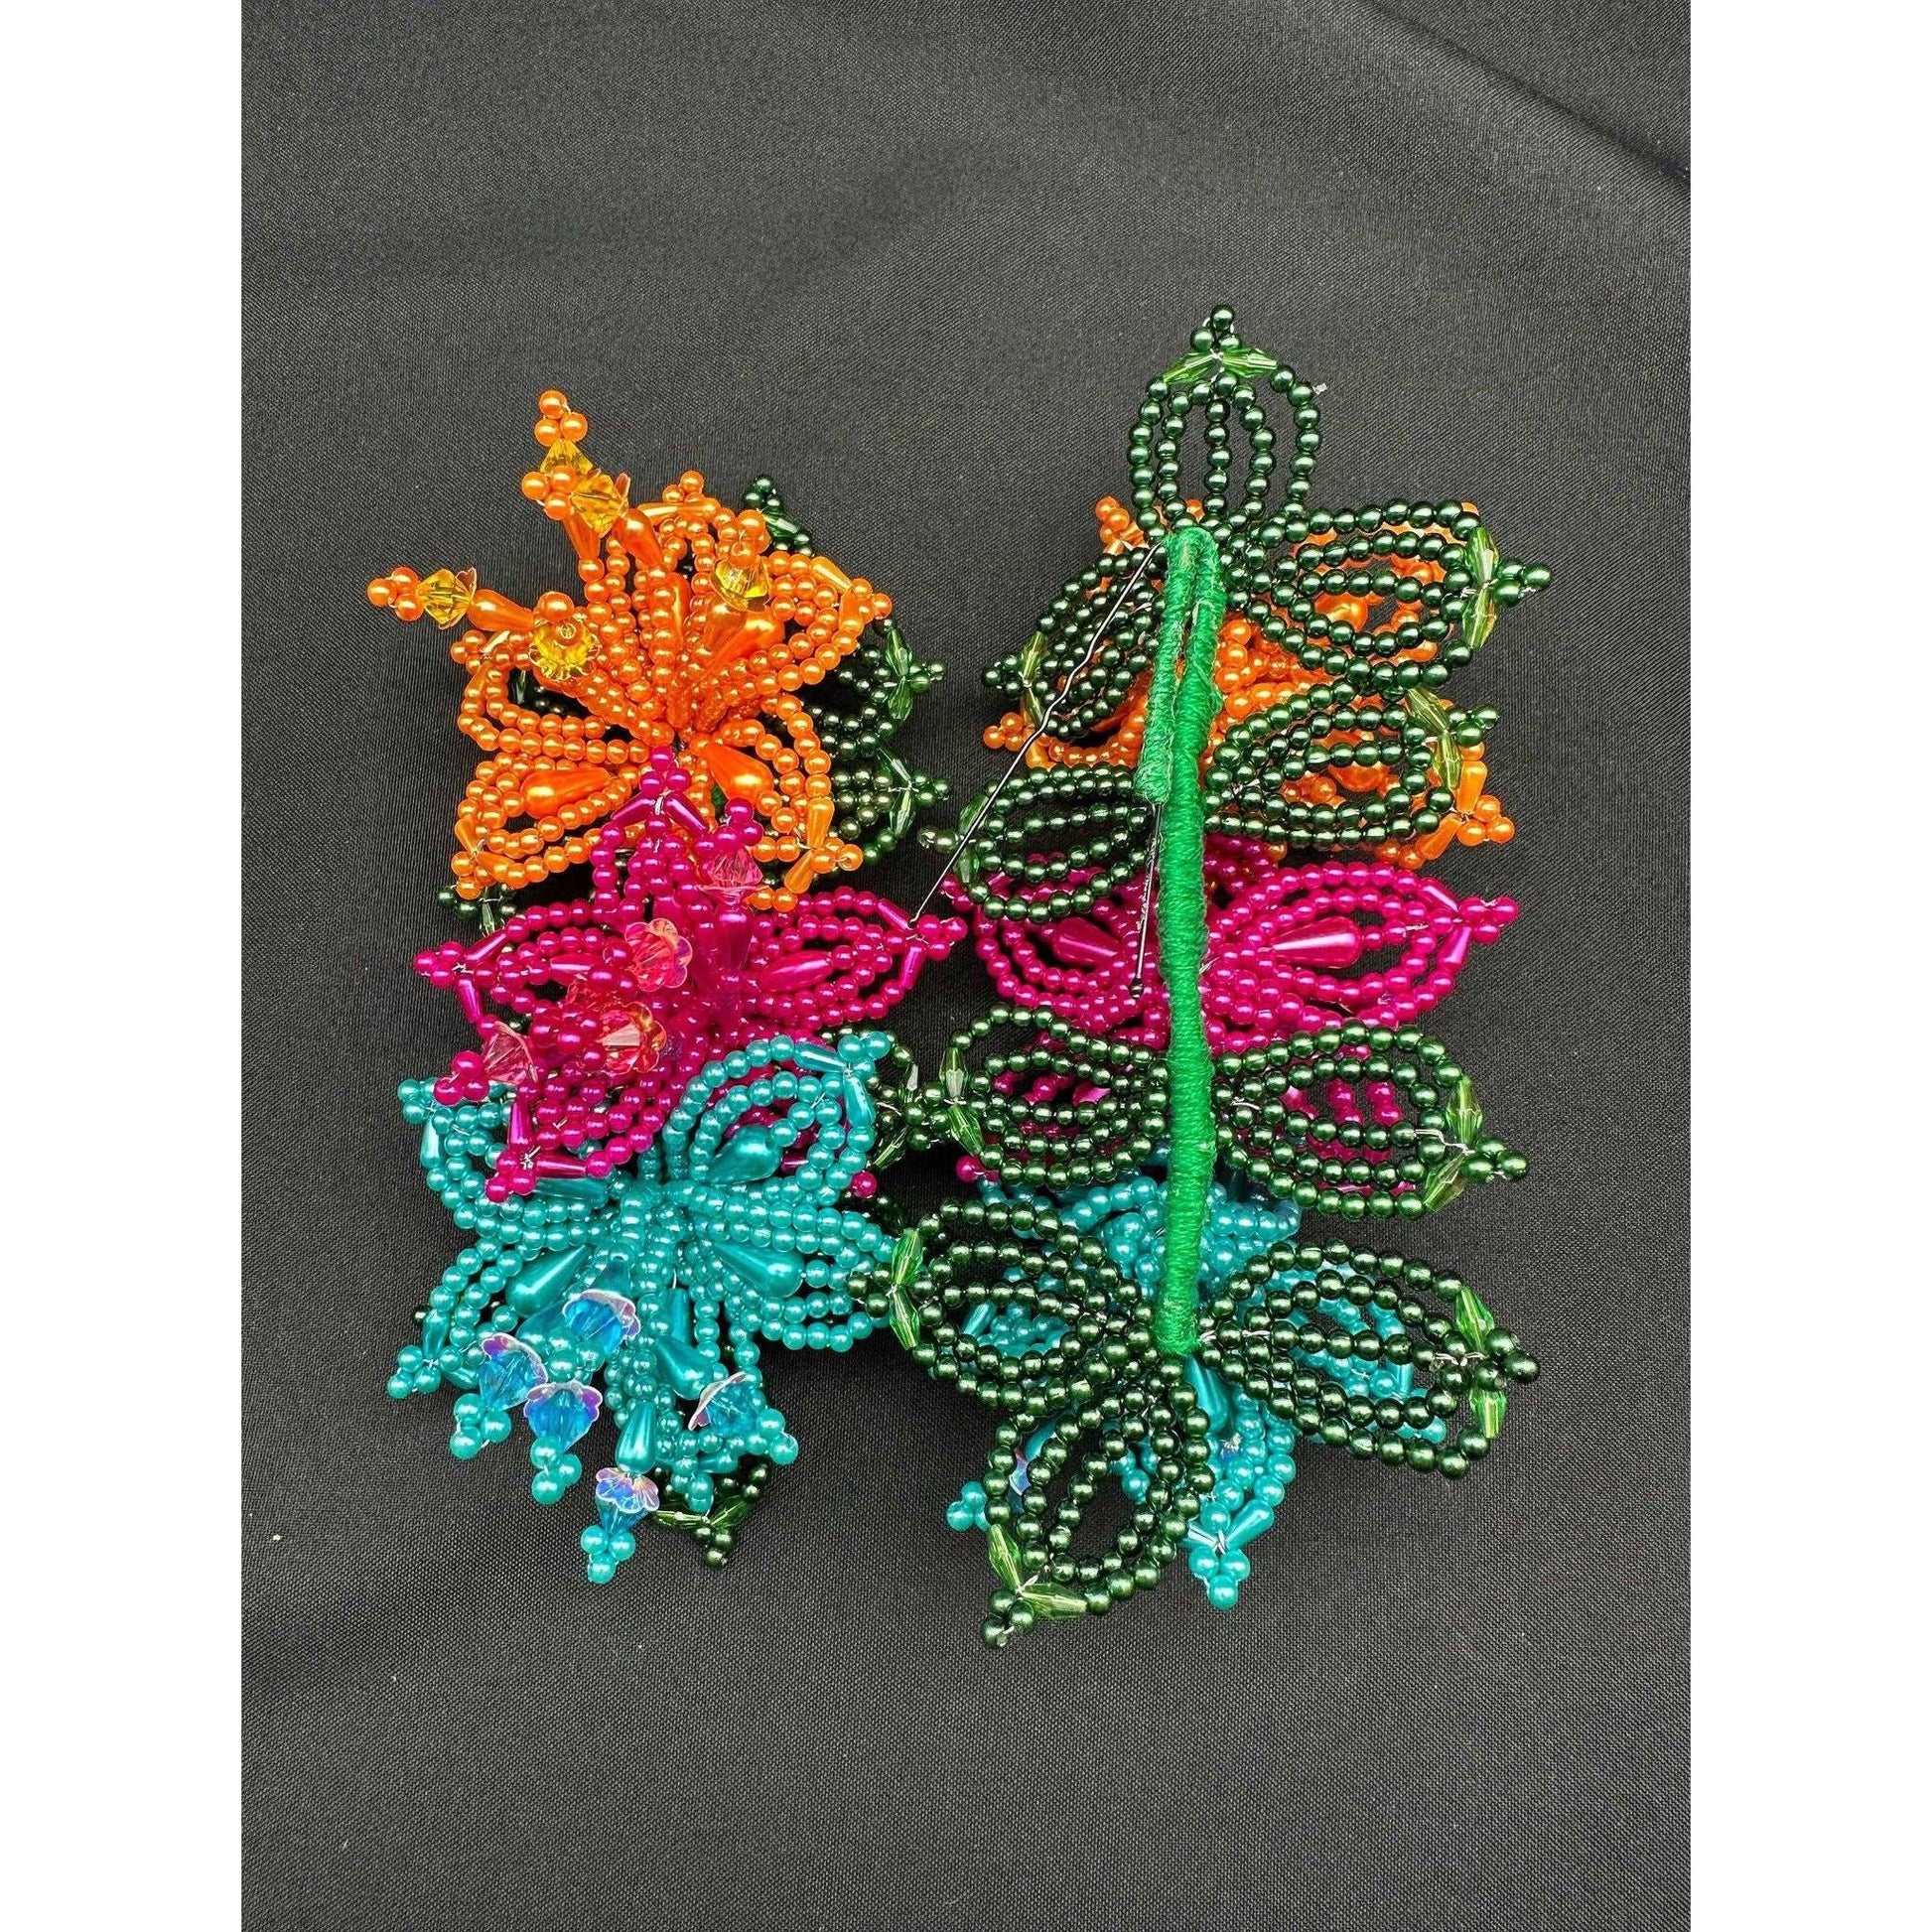 Pair (2) of Tapamoños Tembleques Colorful Beaded Flower Pearl Panama Pollera Hair Pin Orange Pink Turquoise - Vivian Fong Designs